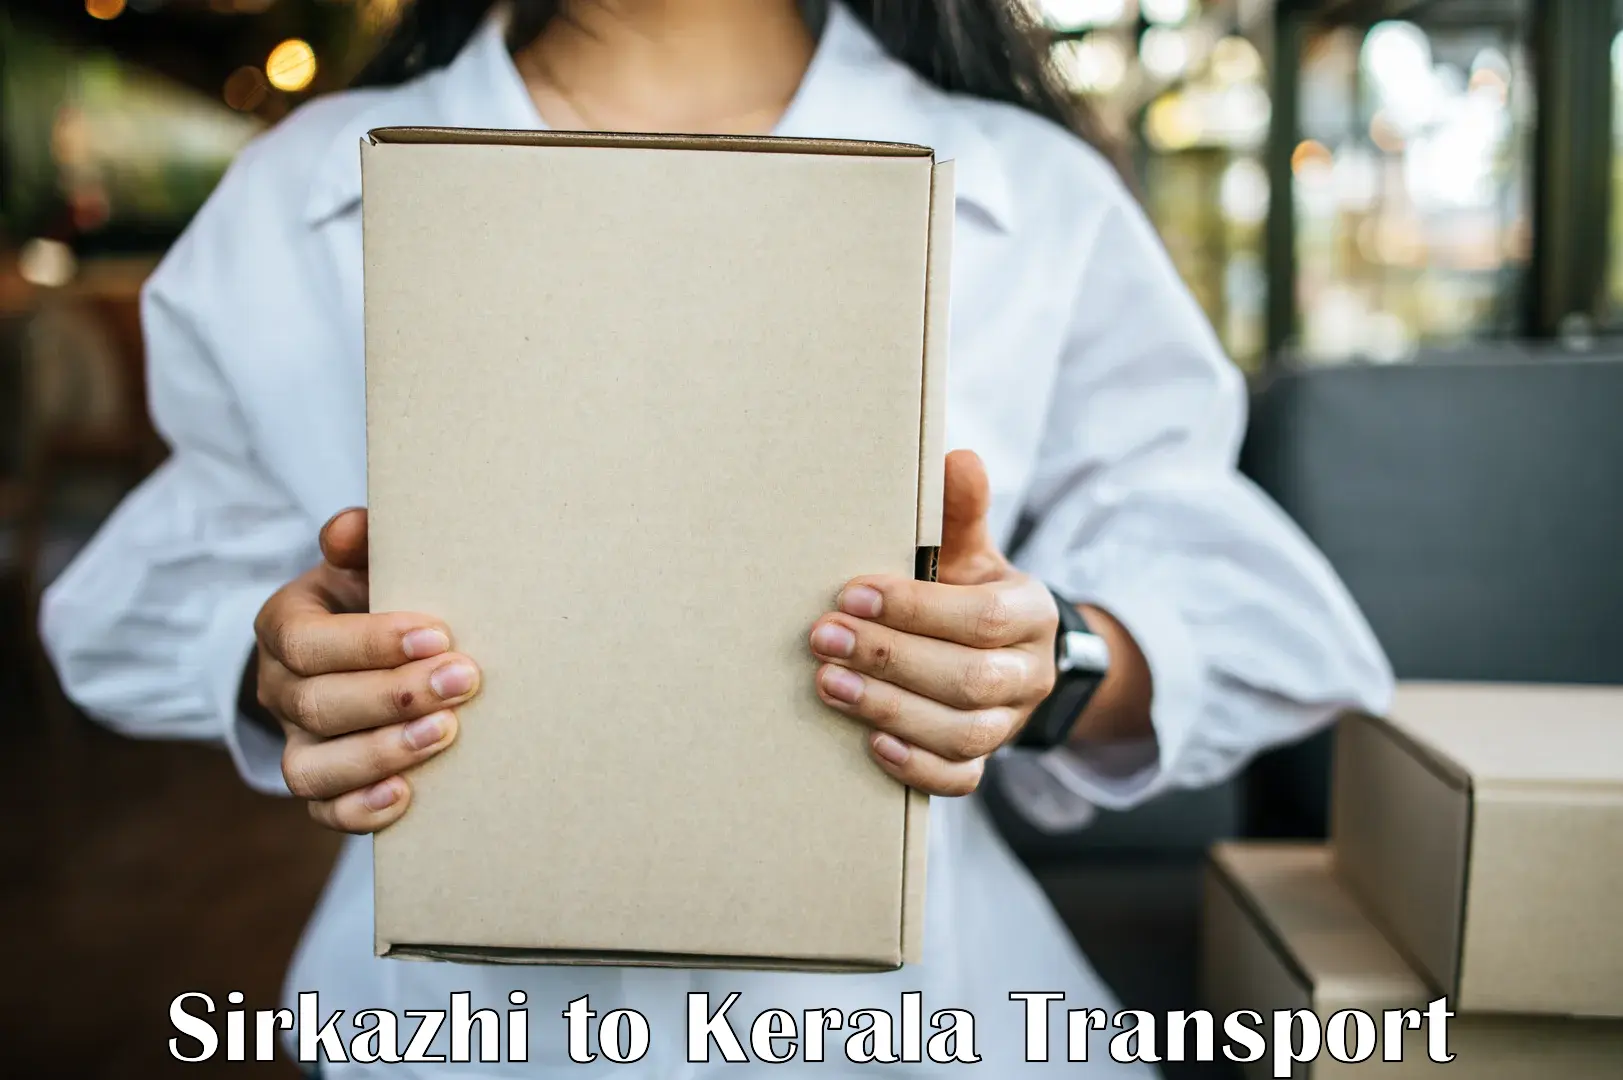 Online transport service Sirkazhi to Kerala